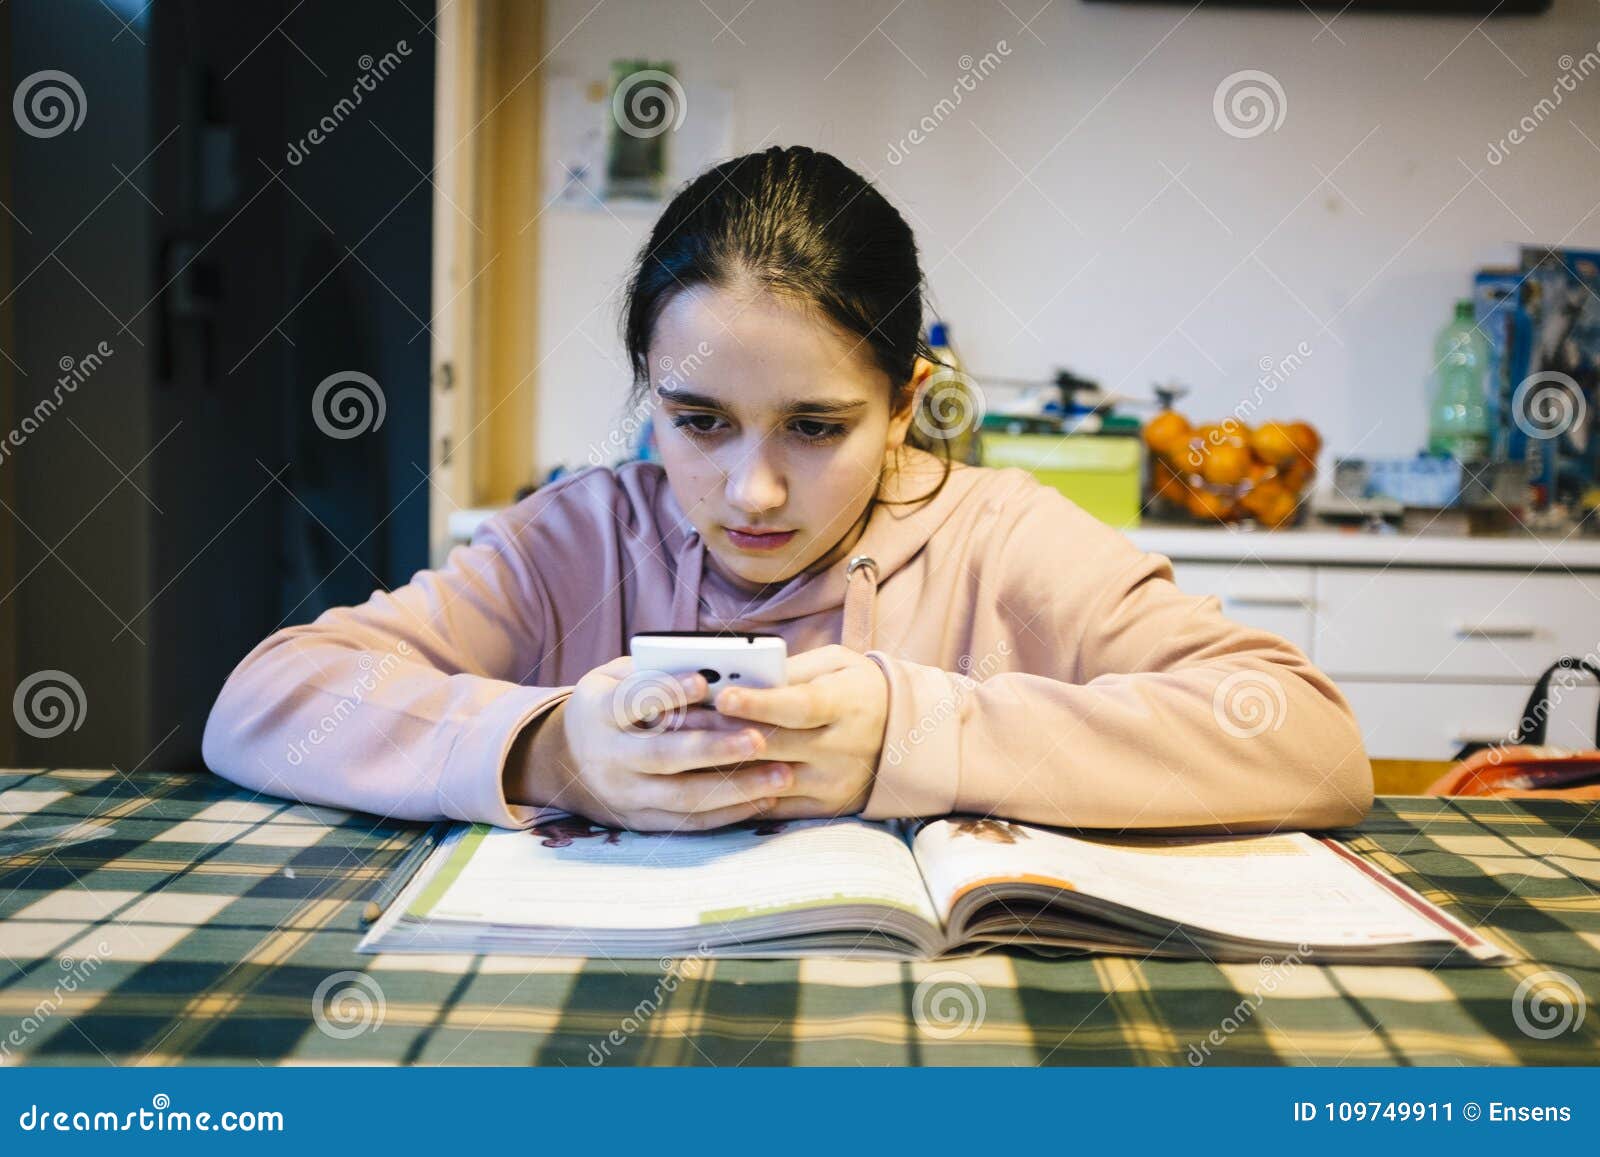 after dinner she do her homework